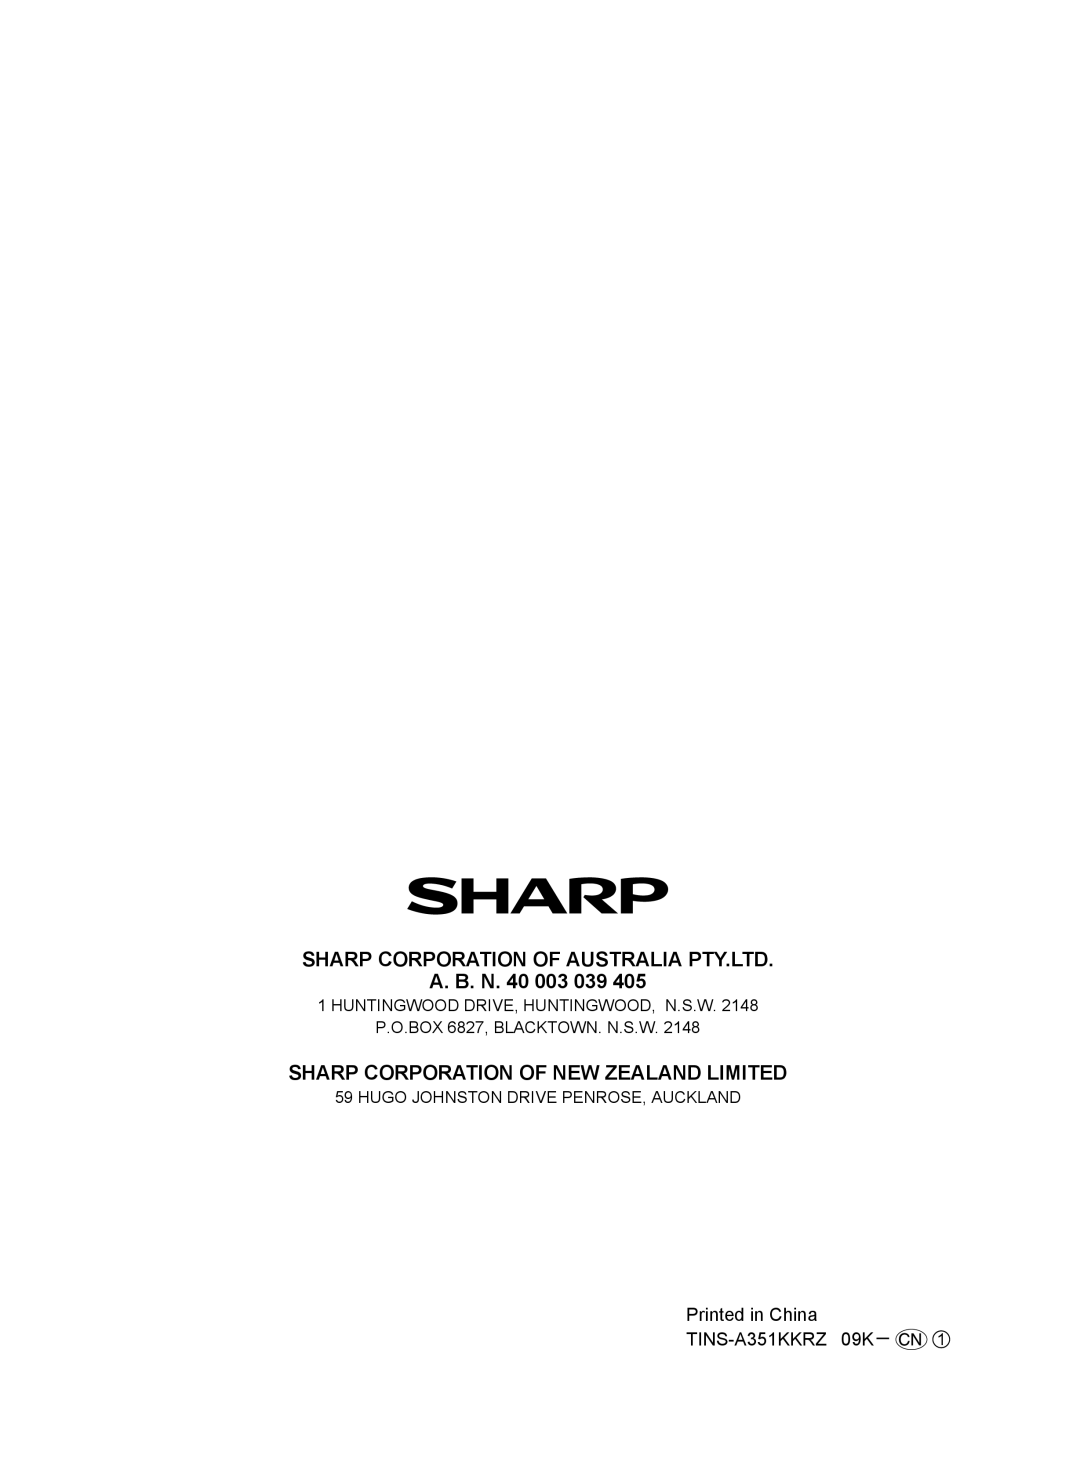 Sharp FU-Y30J-W operation manual A. B. N, Sharp Corporation Of New Zealand Limited, TINS-A351KKRZ09K 